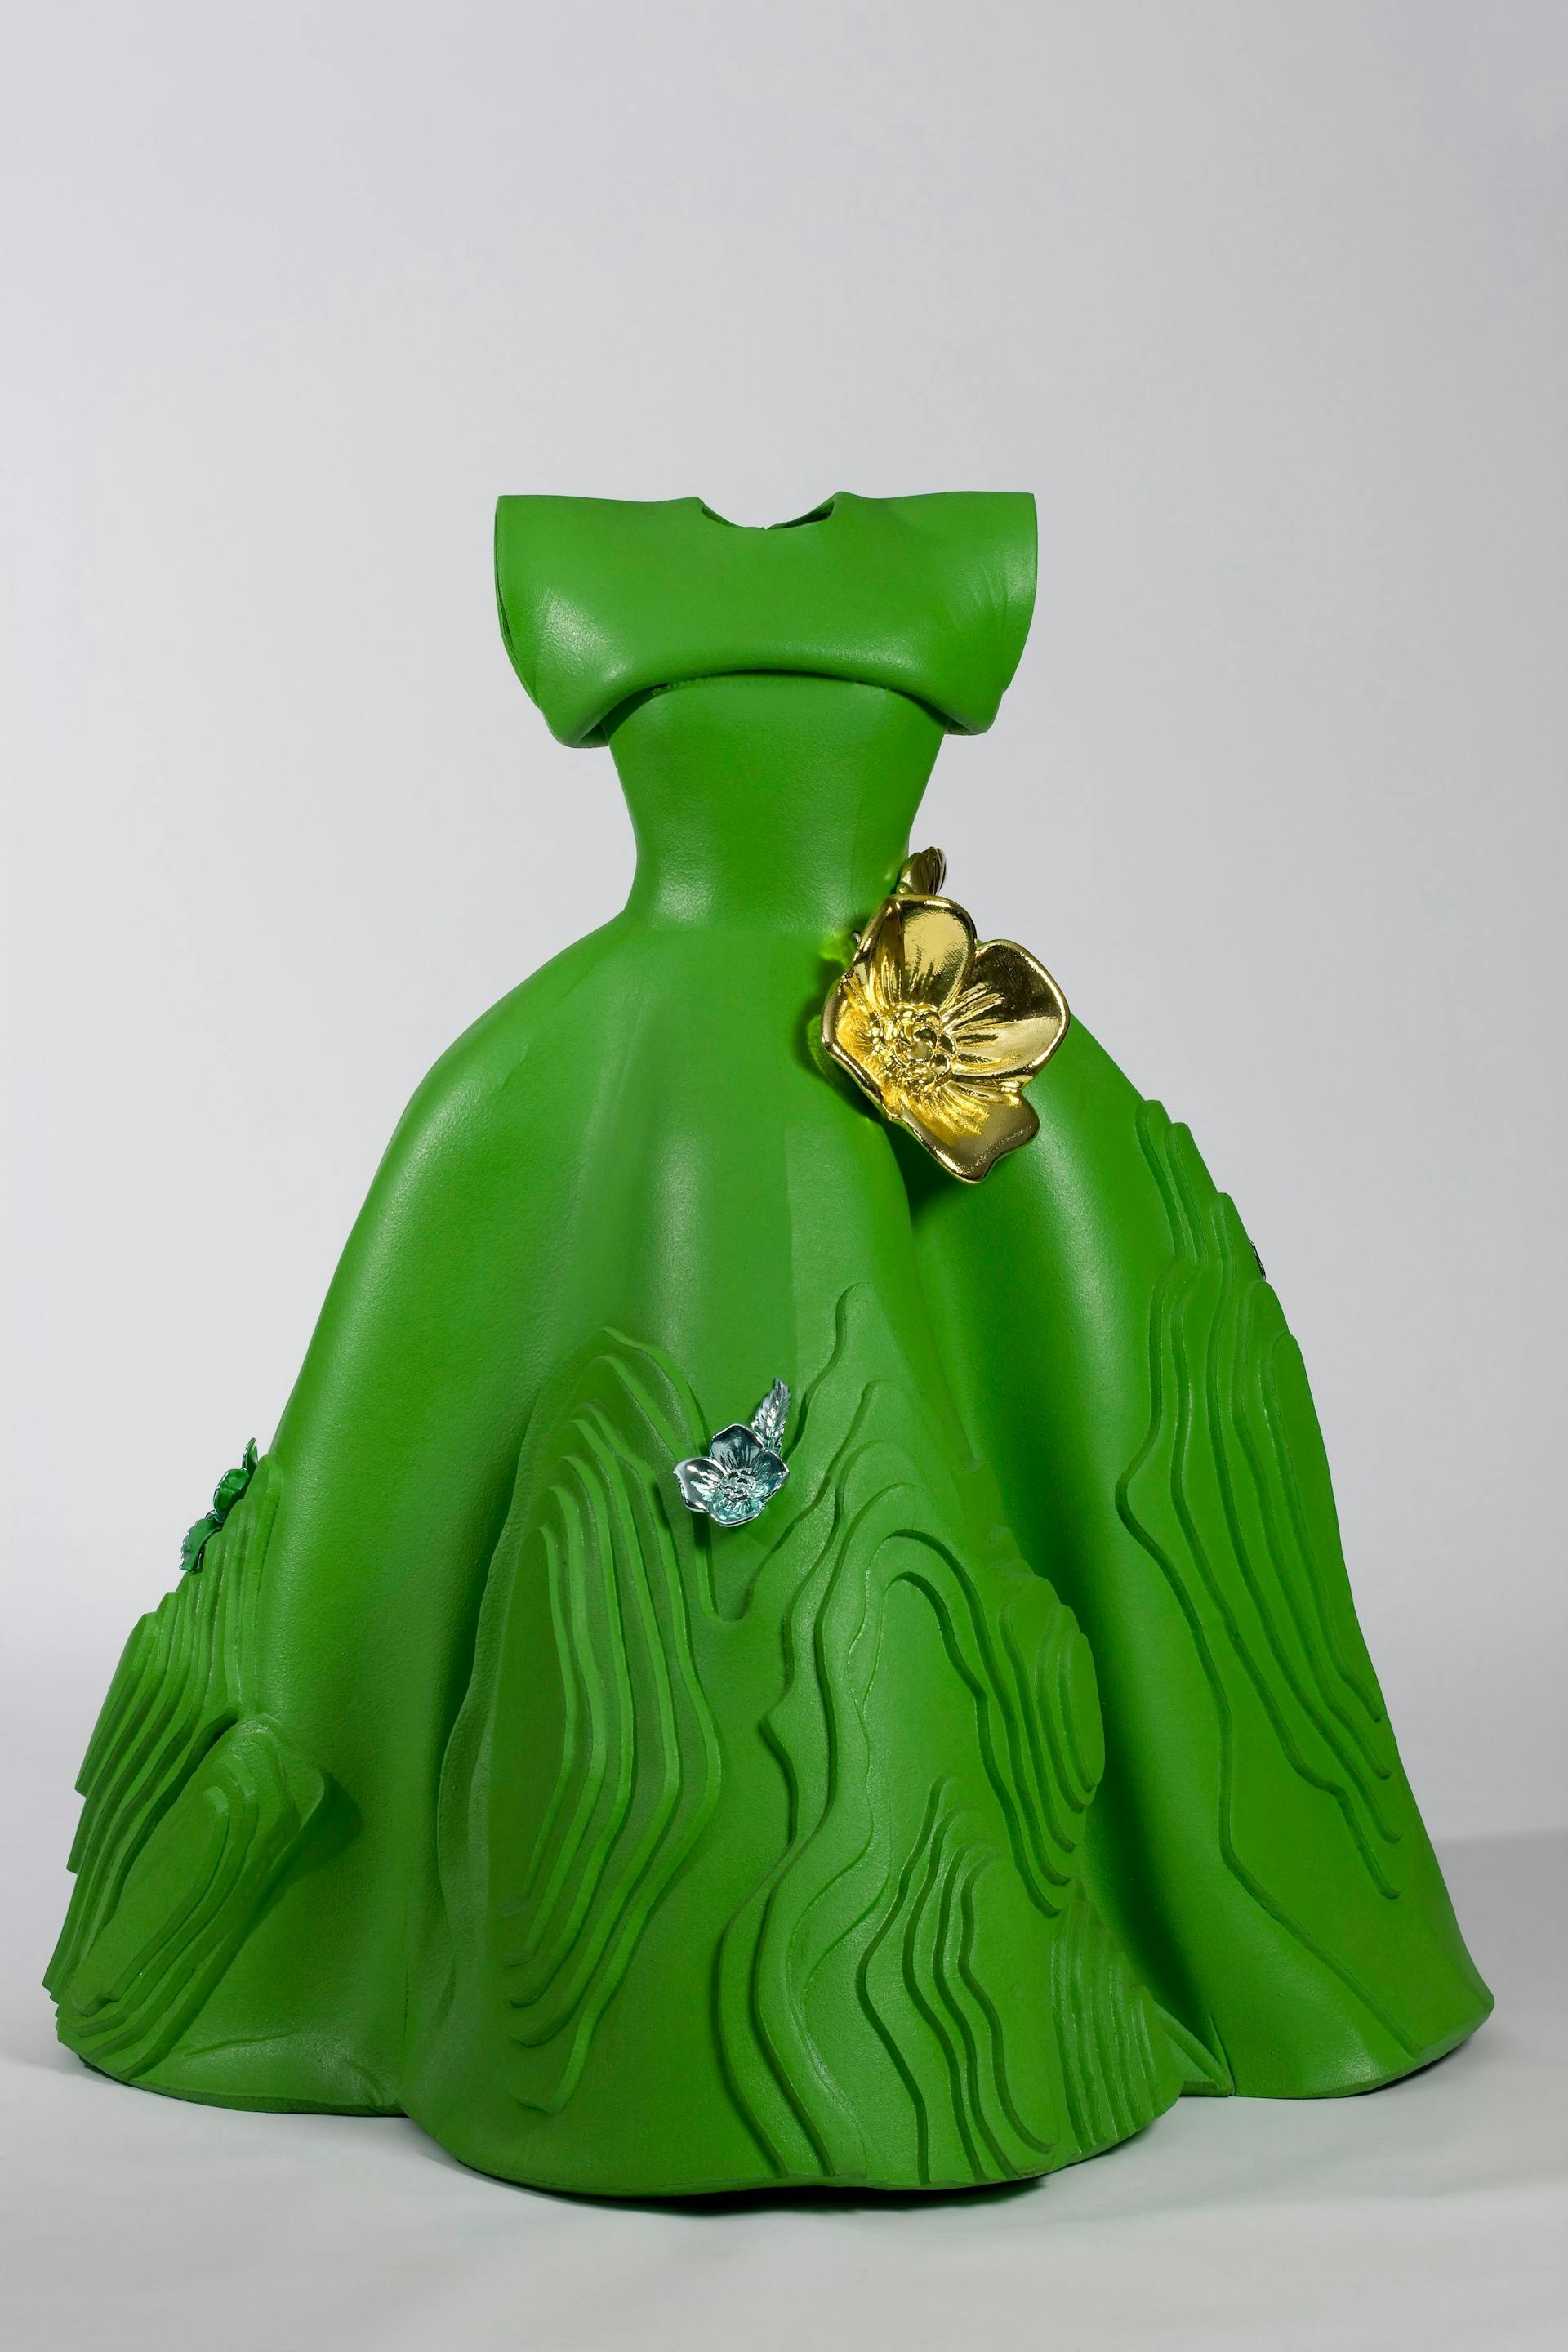 Marga Weimans, Green Landscape Dress (from the Wonderland Collection, spring/summer 2009), 2008, polyurethane, plastic. Groninger Museum, purchased with support of the Mondriaan Fund. Photo: Marten de Leeuw.   